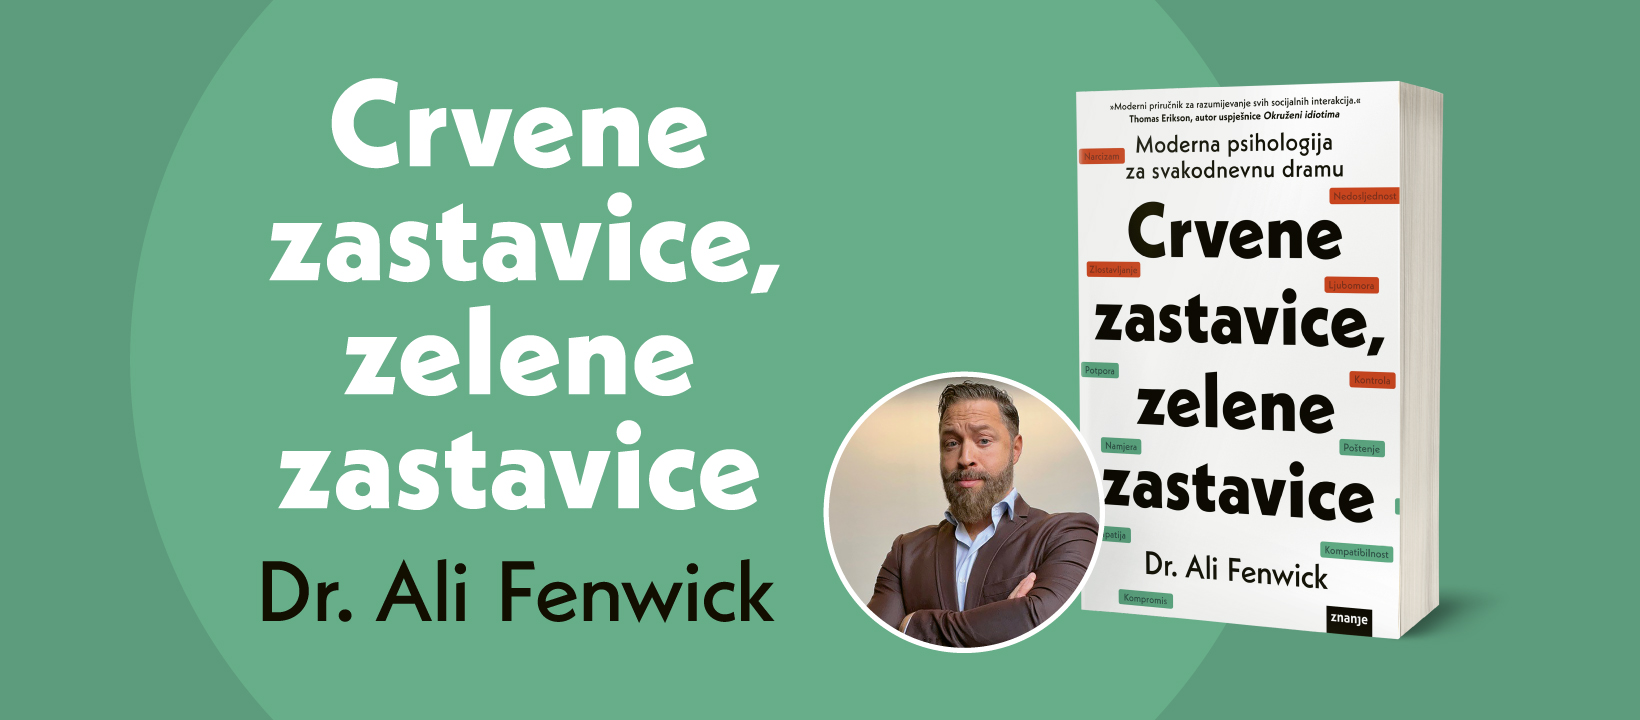 Crvene zastavice, zelene zastavice: omiljeni psiholog dr. Ali Fenwick dolazi u Zagreb 